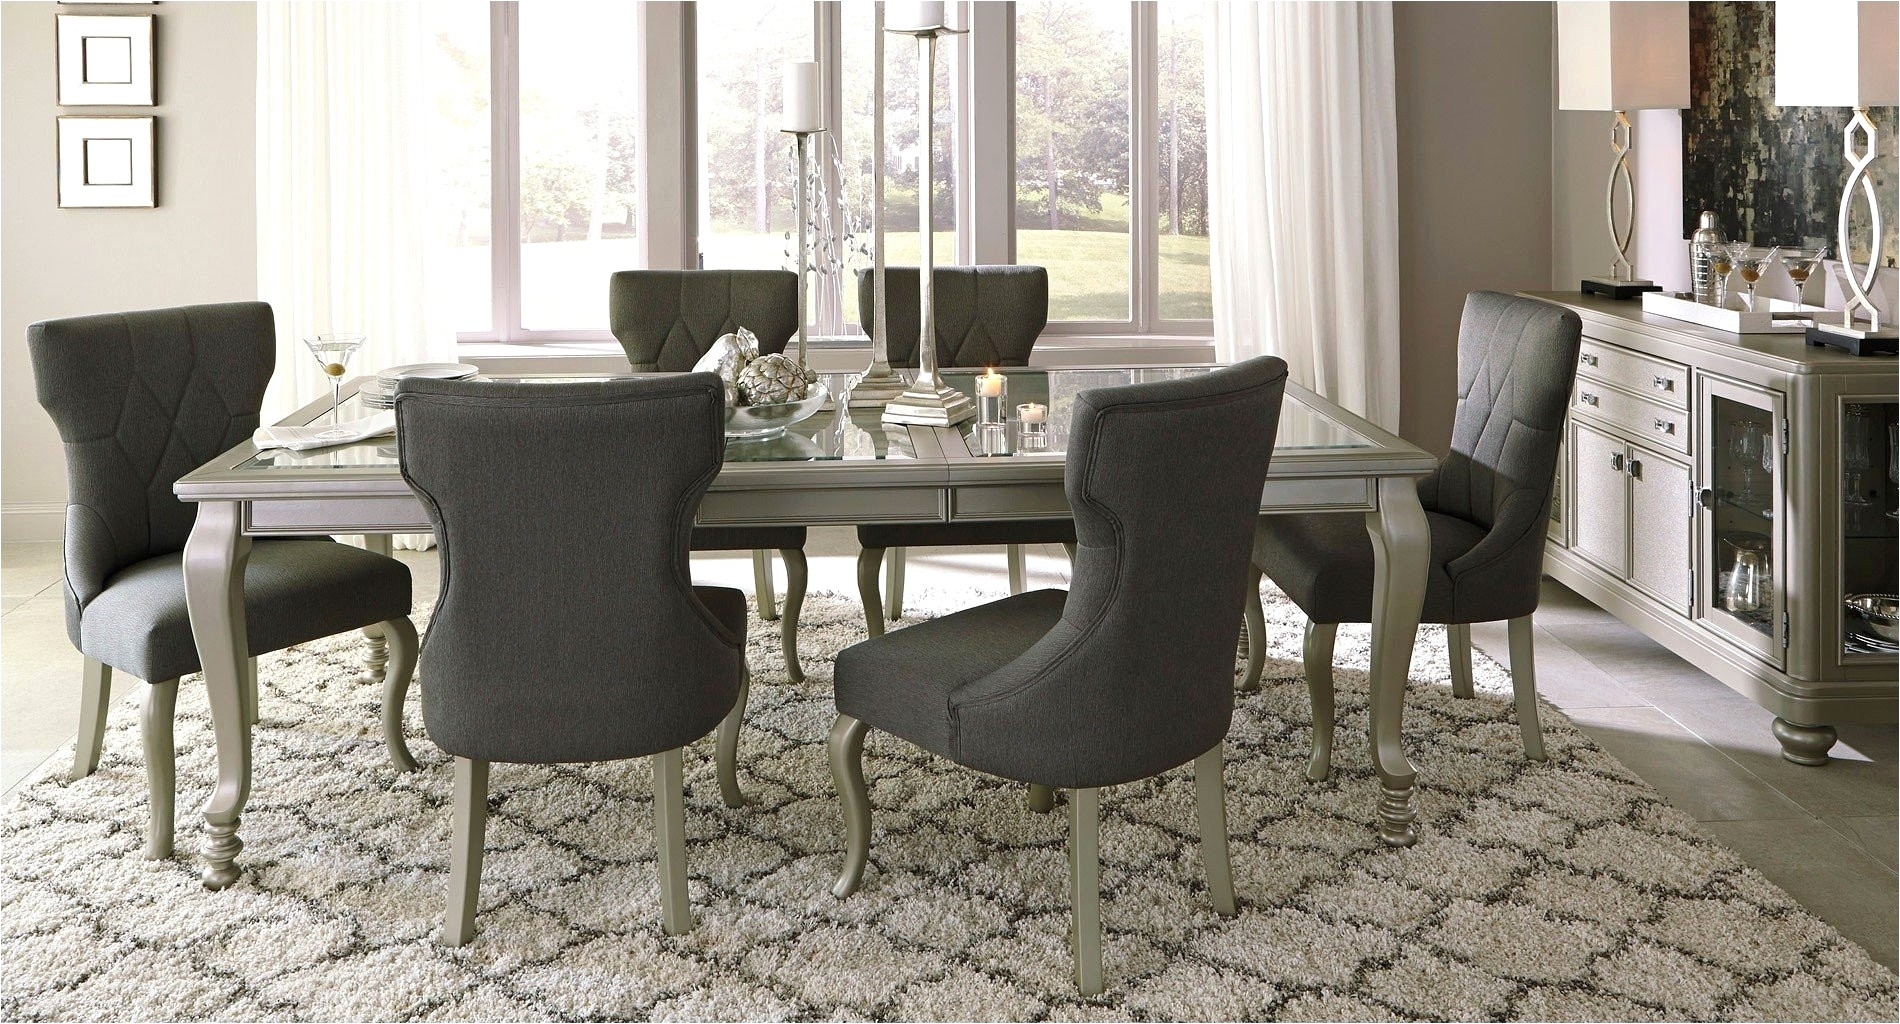 Design This Home Living Room Brilliant Living Room Furniture Contemporary Design Elegant Shaker Chairs 0d